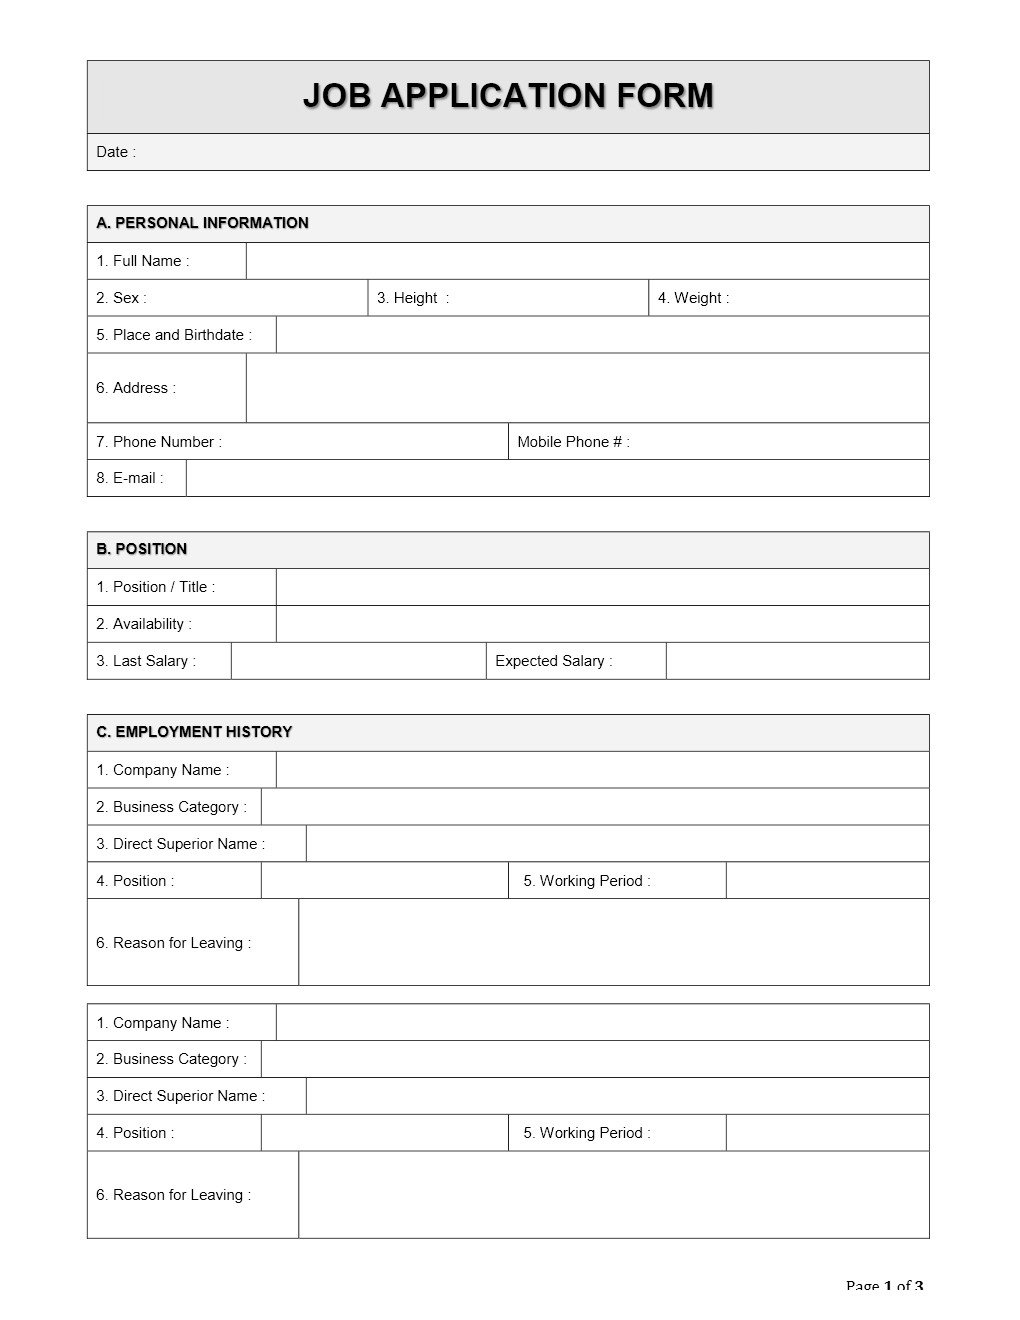 Job Application Template Word Document Employee Job Application form